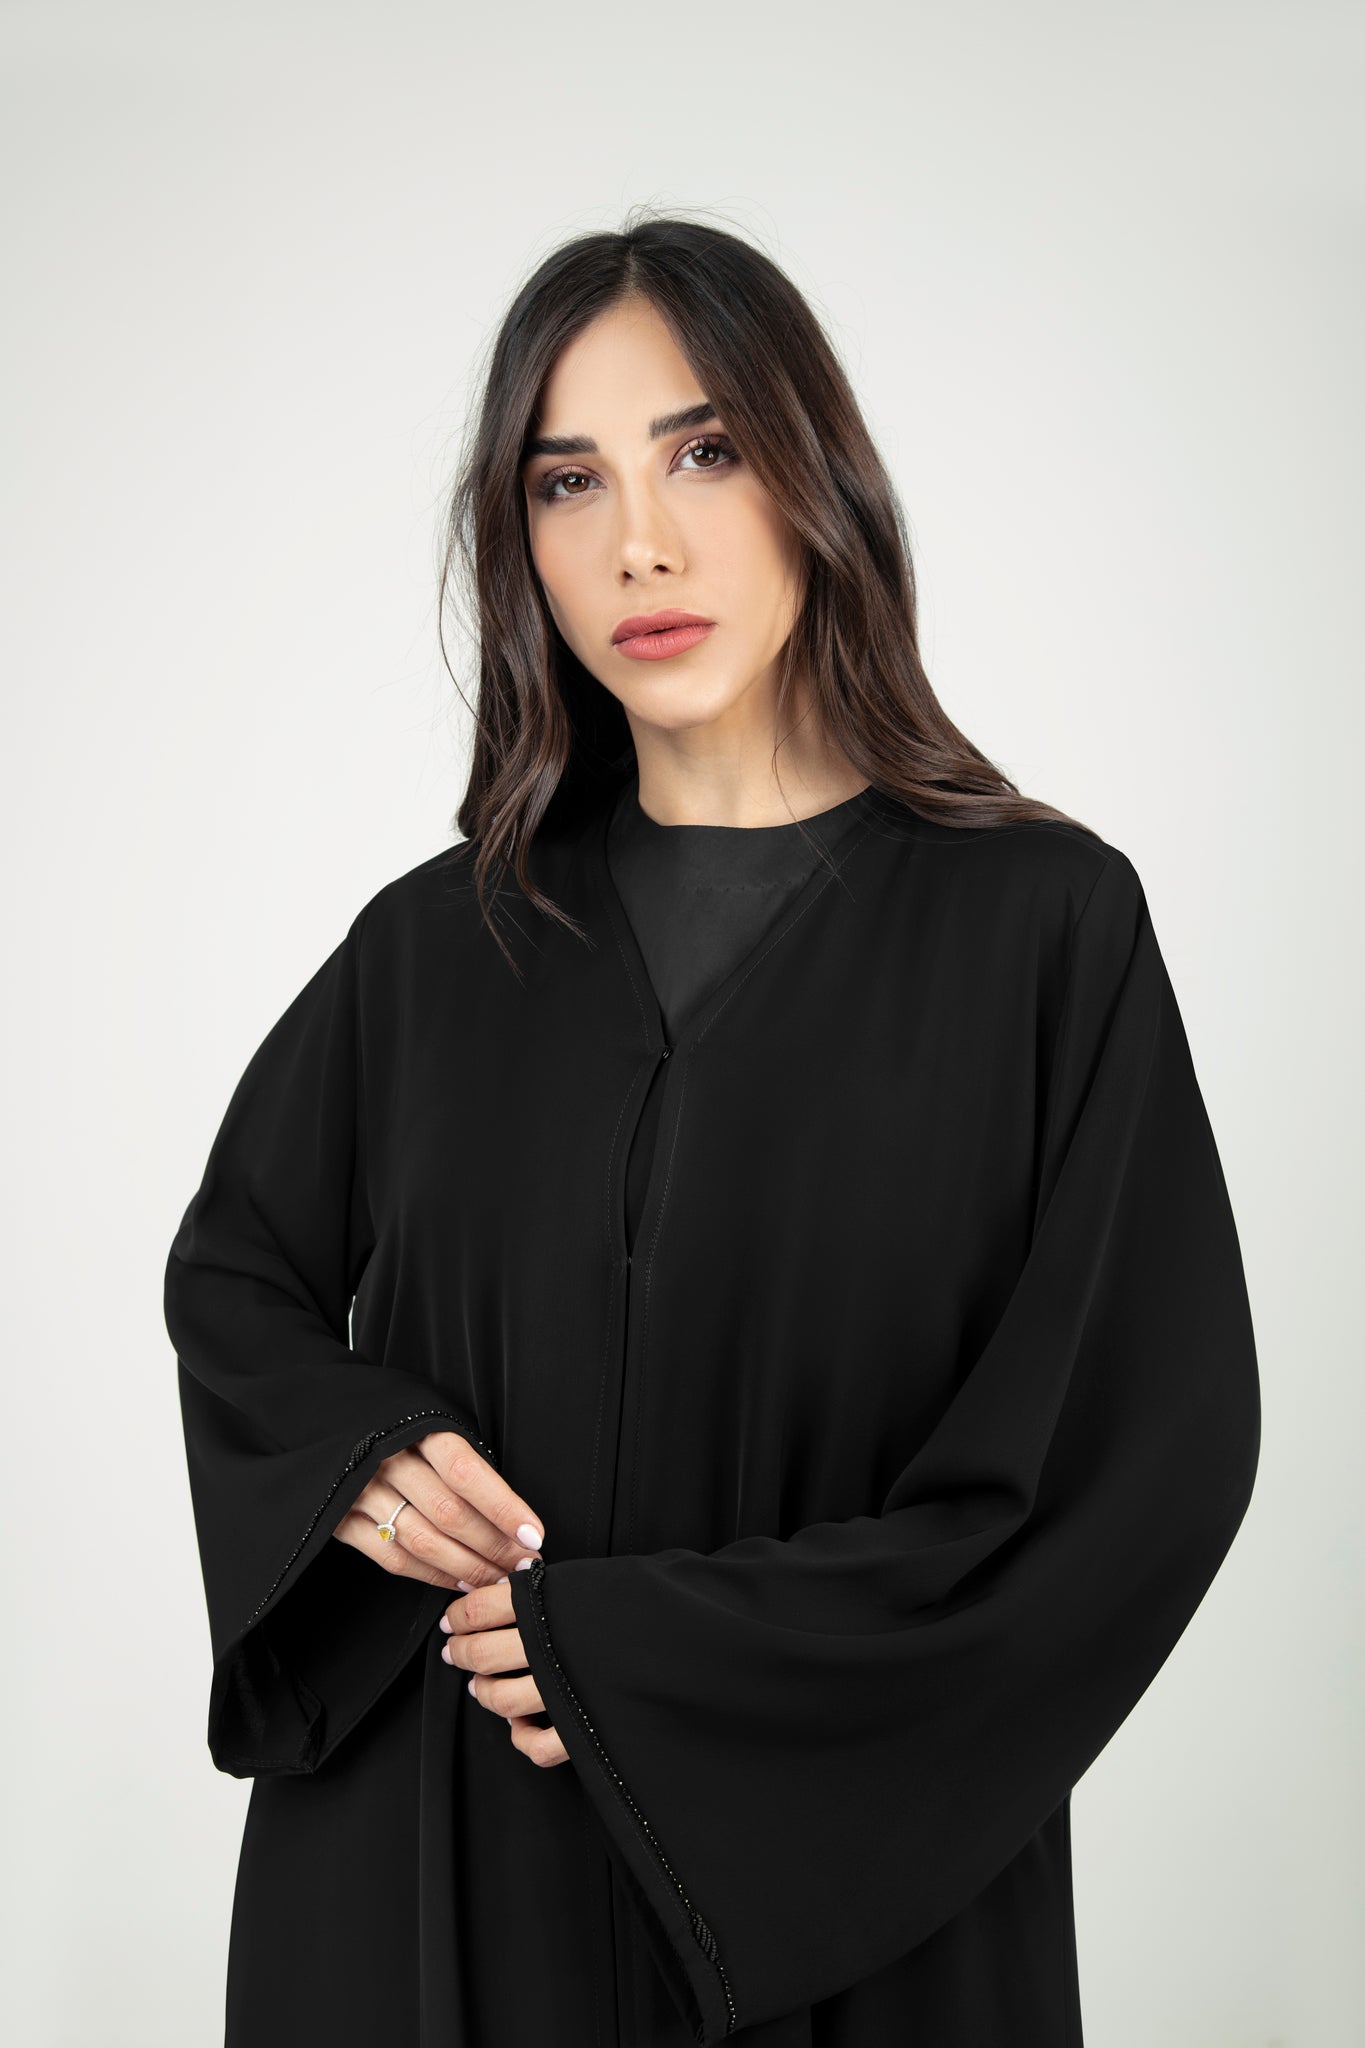 Black Abaya With Bead Details